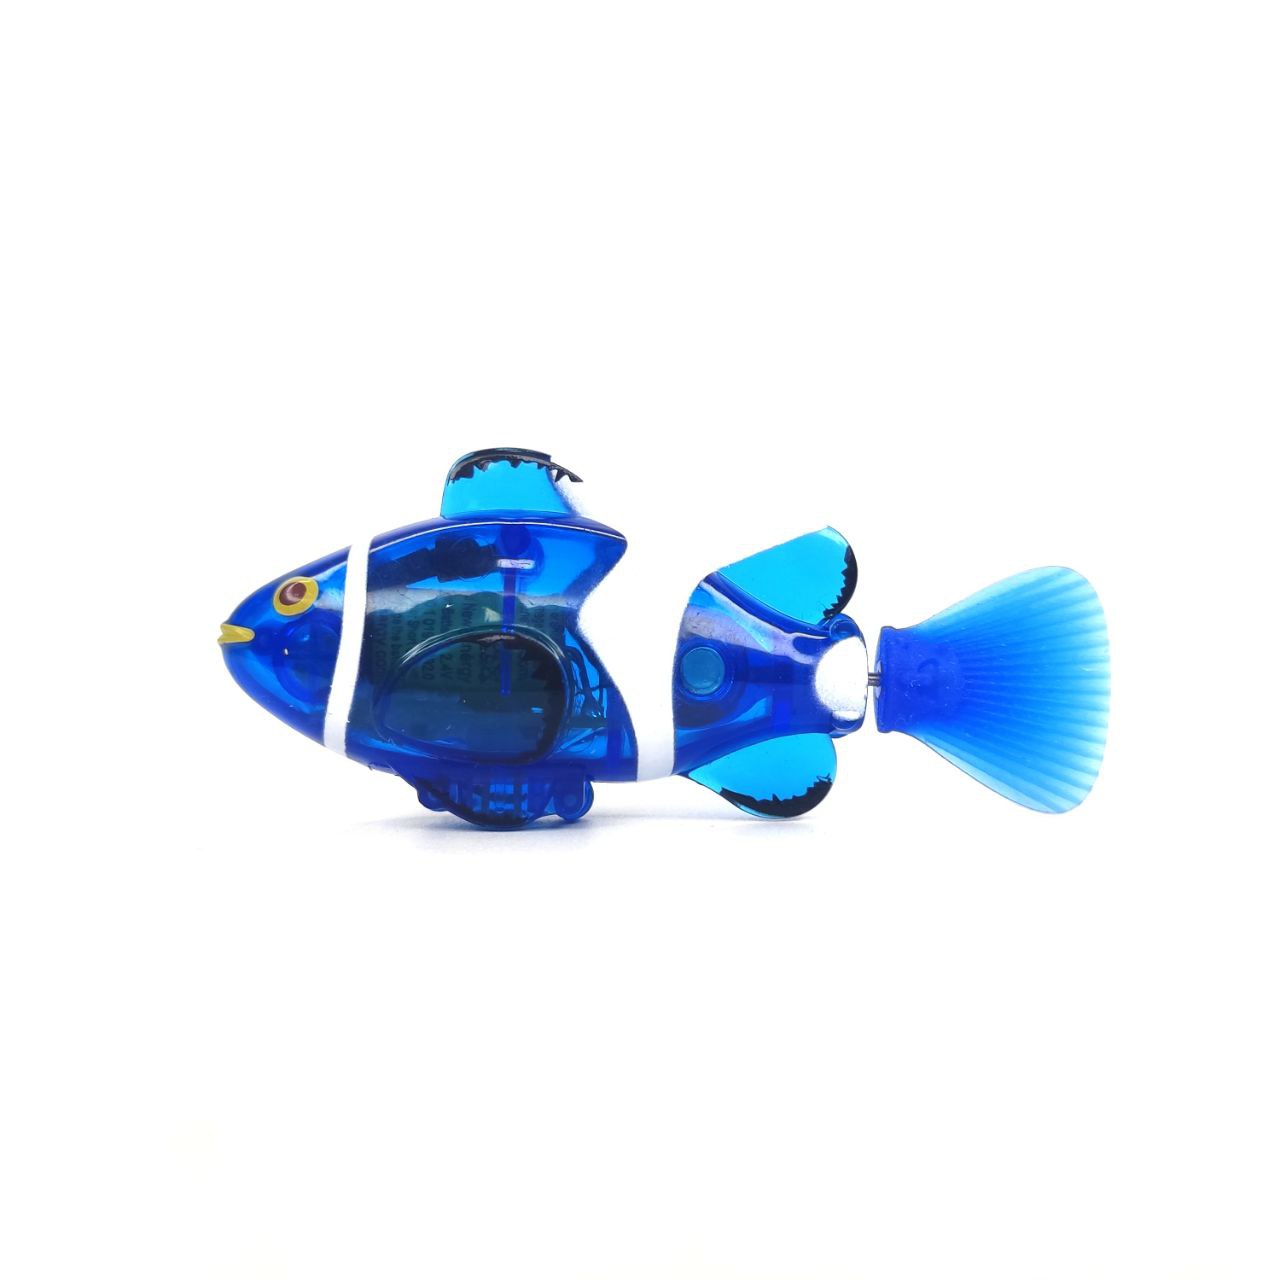 Радиоуправляемая рыбка Create Toys Clown Fish 27Mhz 3316-BLUE пустышка бамбук латексная sunrise blue 0 6 мес 2шт в упаковке